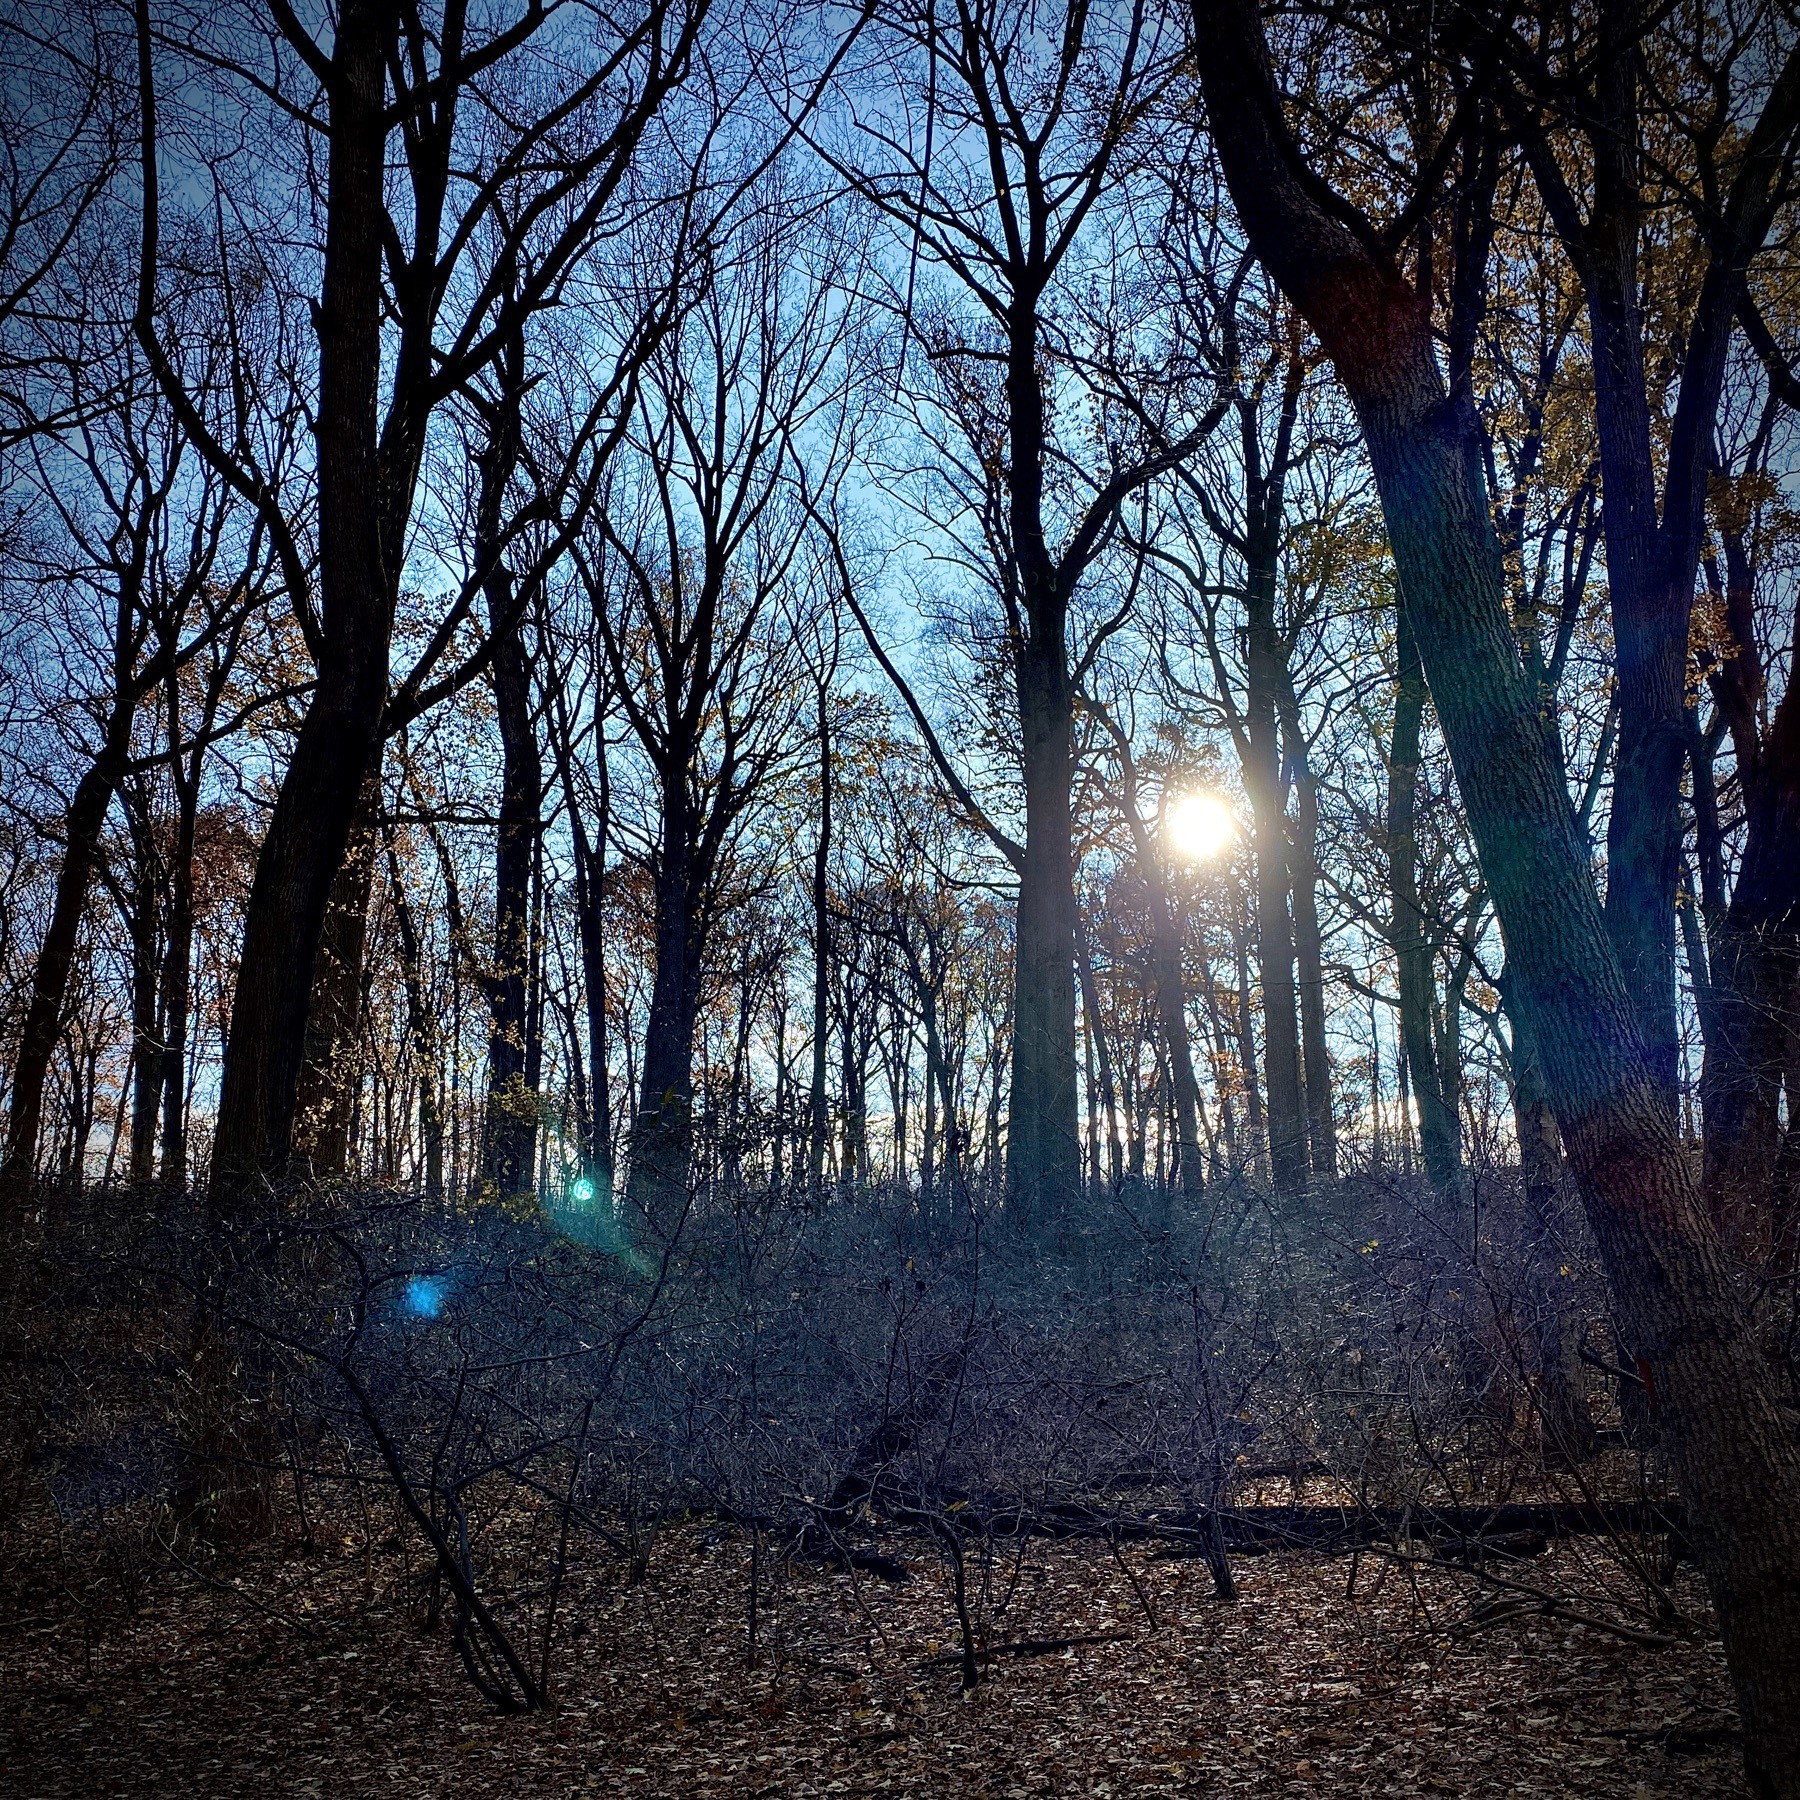 Inwood Park, Manhattan. Late fall trees with sun peeking through.